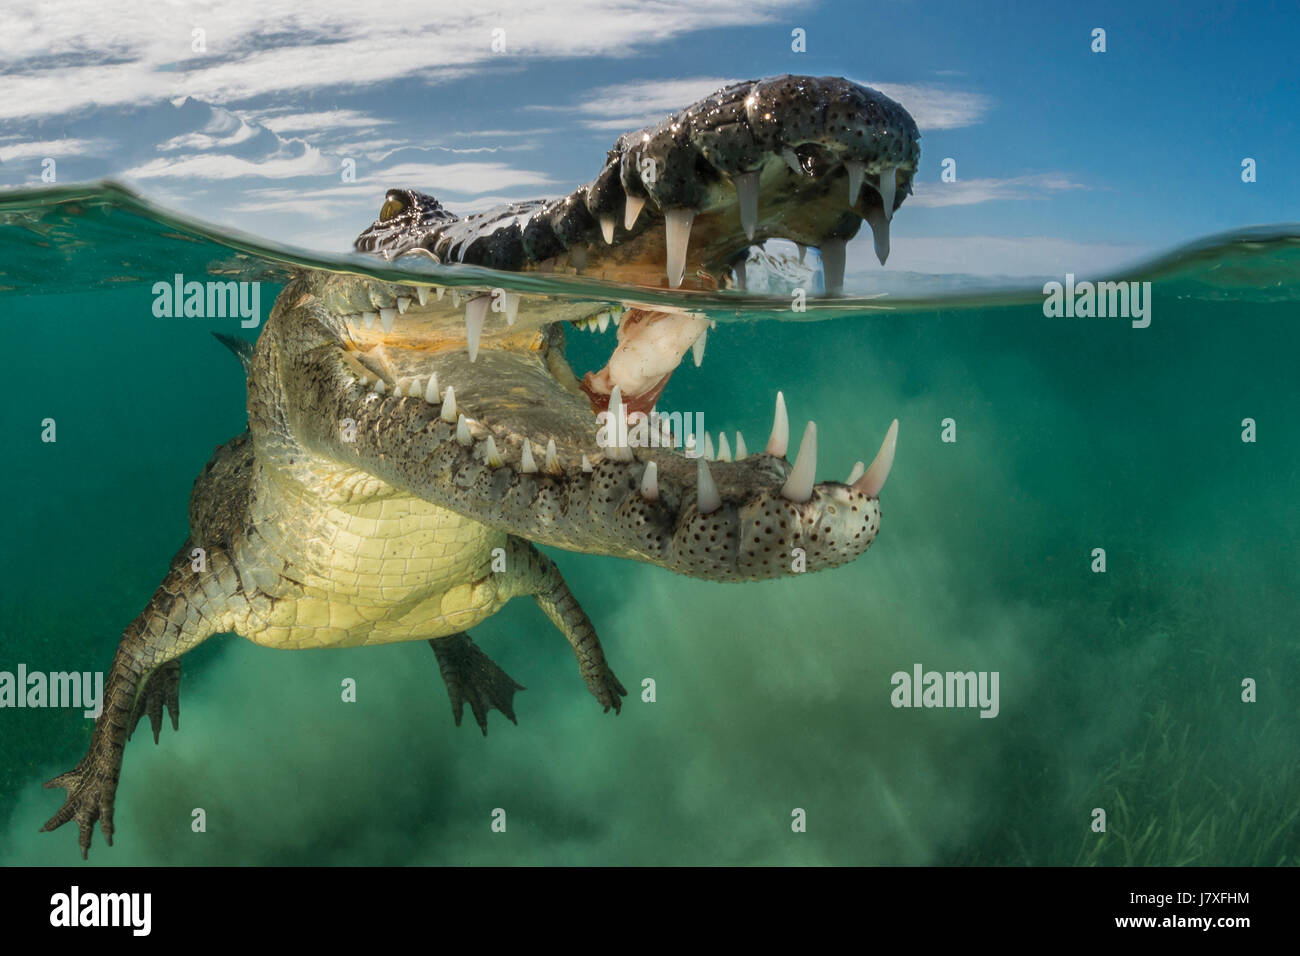 Crocodile, Crocodylus acutus, Jardines de la Reina, Cuba Banque D'Images